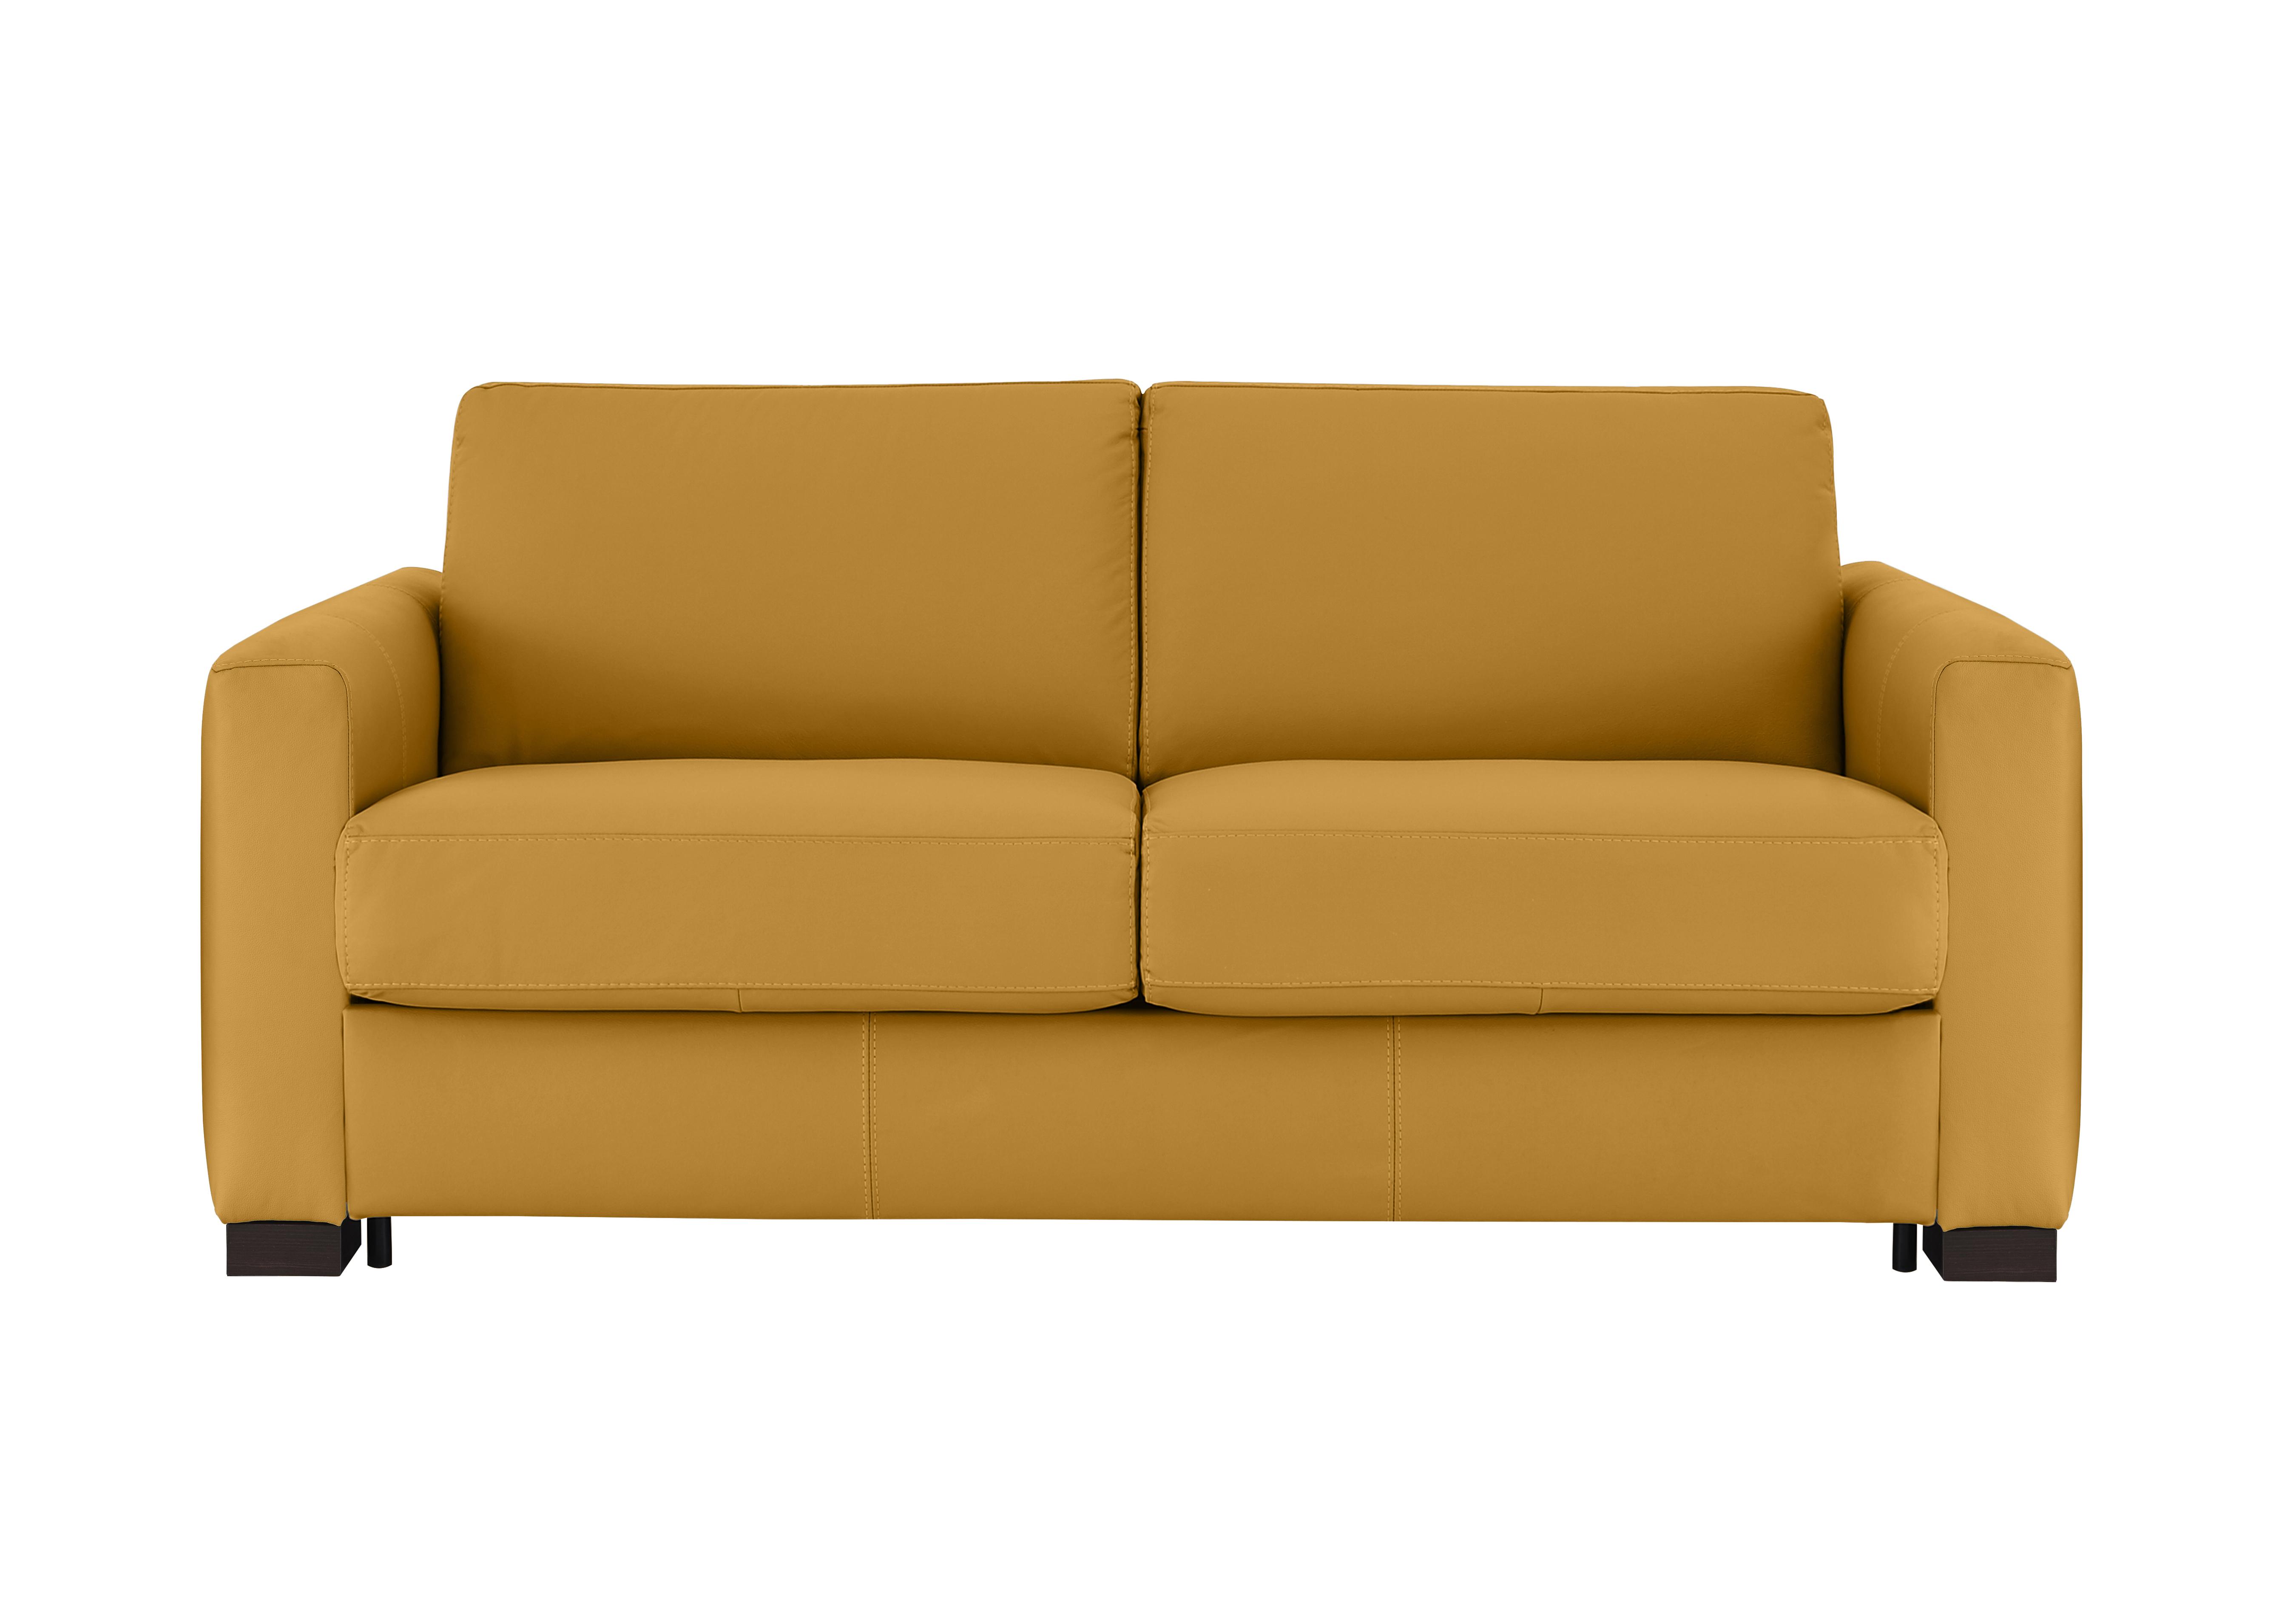 Alcova 2.5 Seater Leather Sofa Bed with Box Arms in Torello Senape 355 on Furniture Village